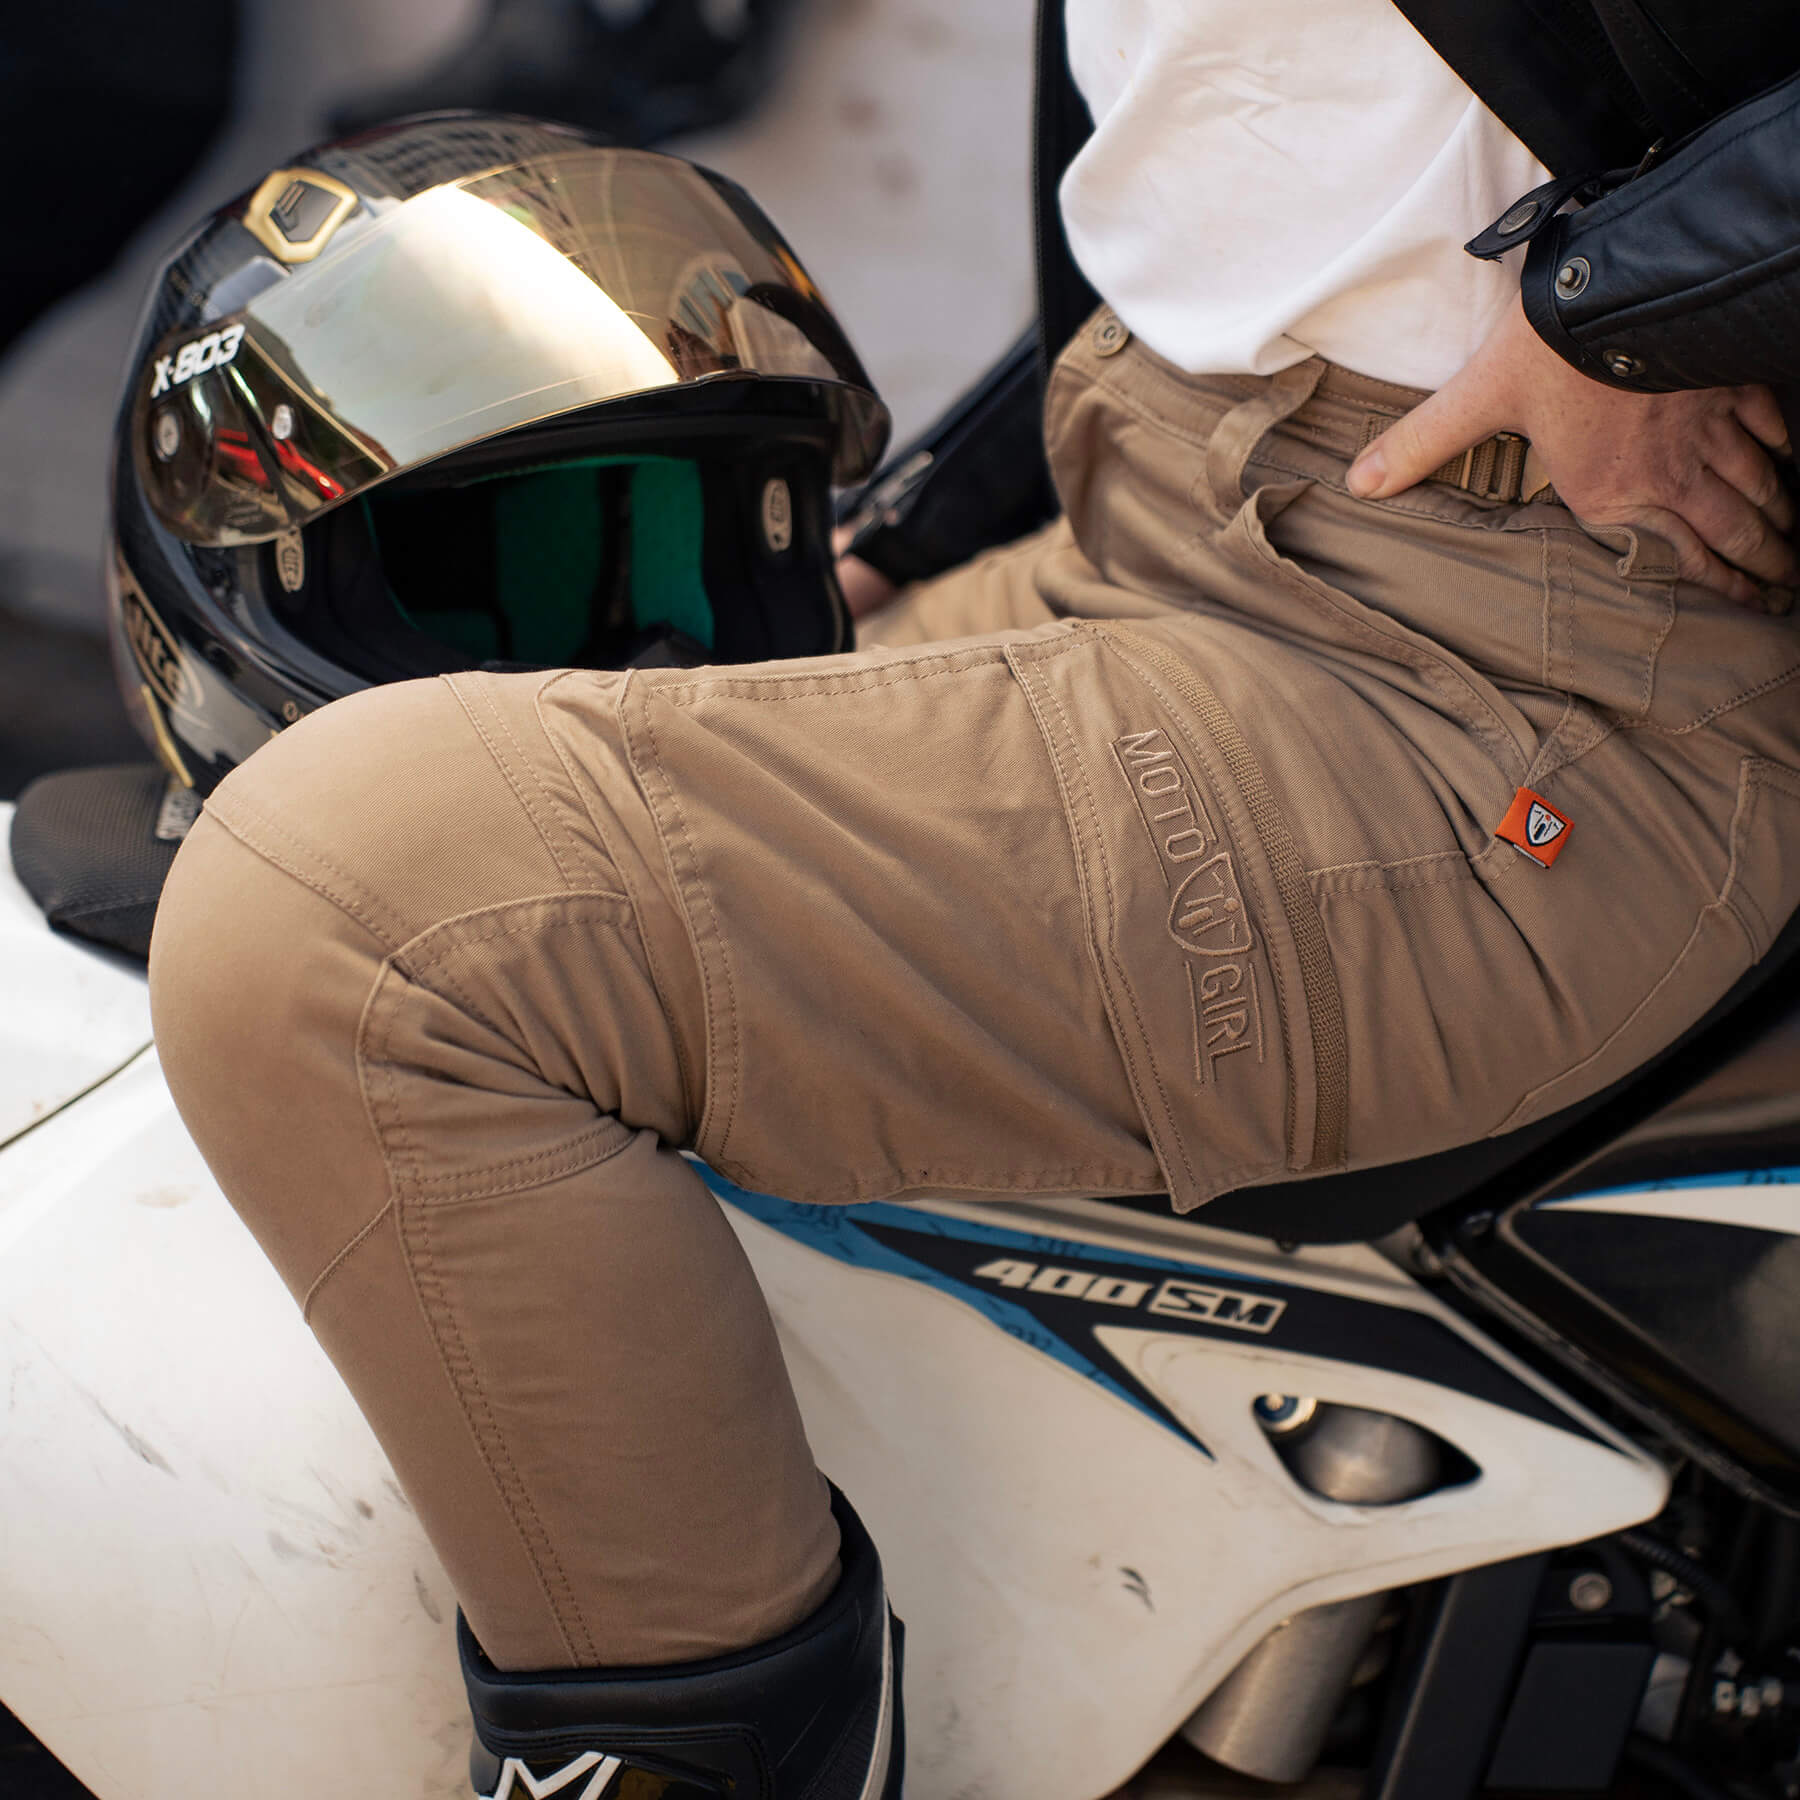 MotoGirl | Lara Cargo Pants - Beige - XS / AU 6 / US 4 - Women's Pants - Peak Moto